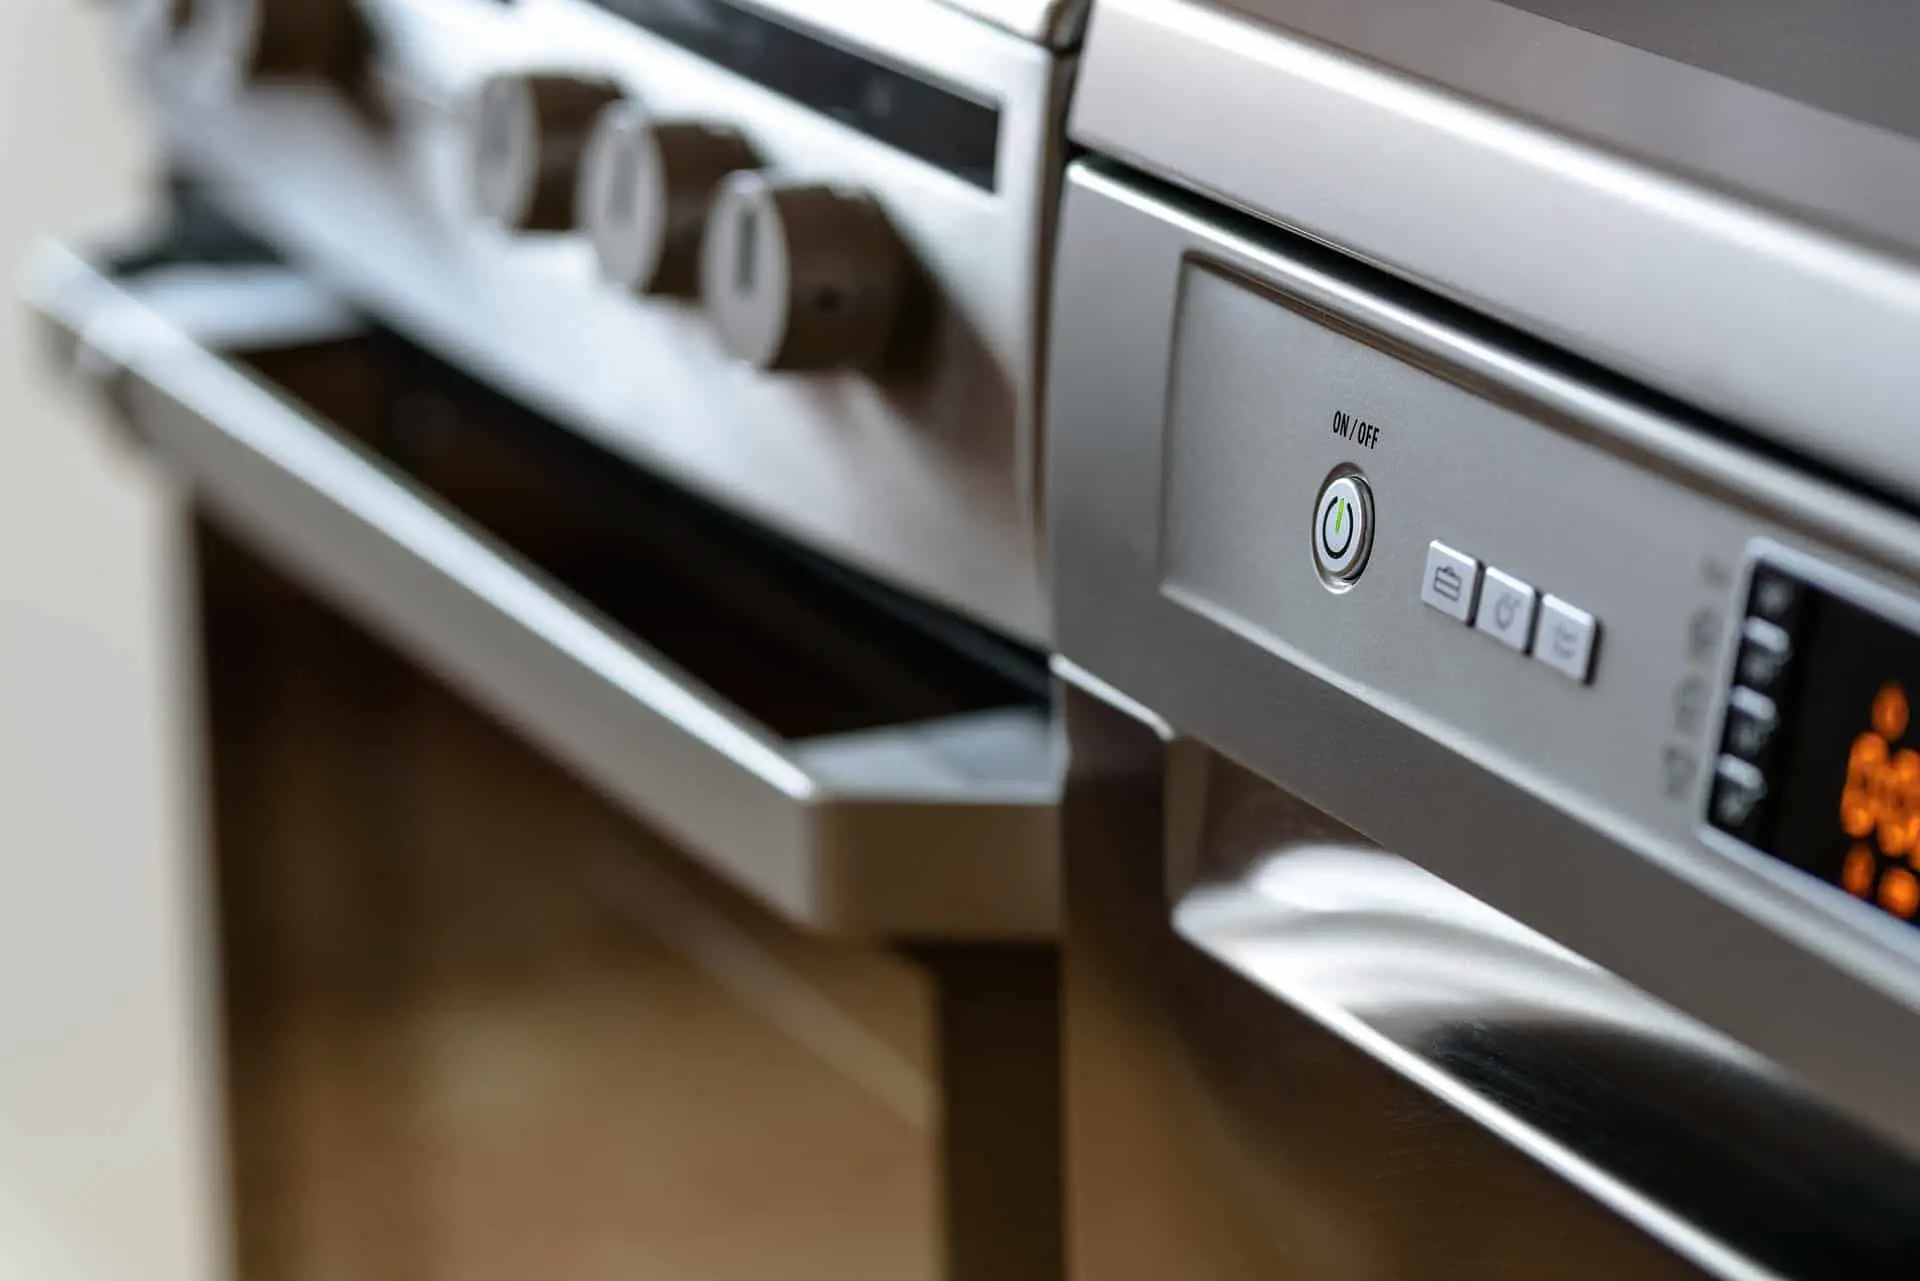 Brand new KitchenAid slow cooker - appliances - by owner - sale - craigslist